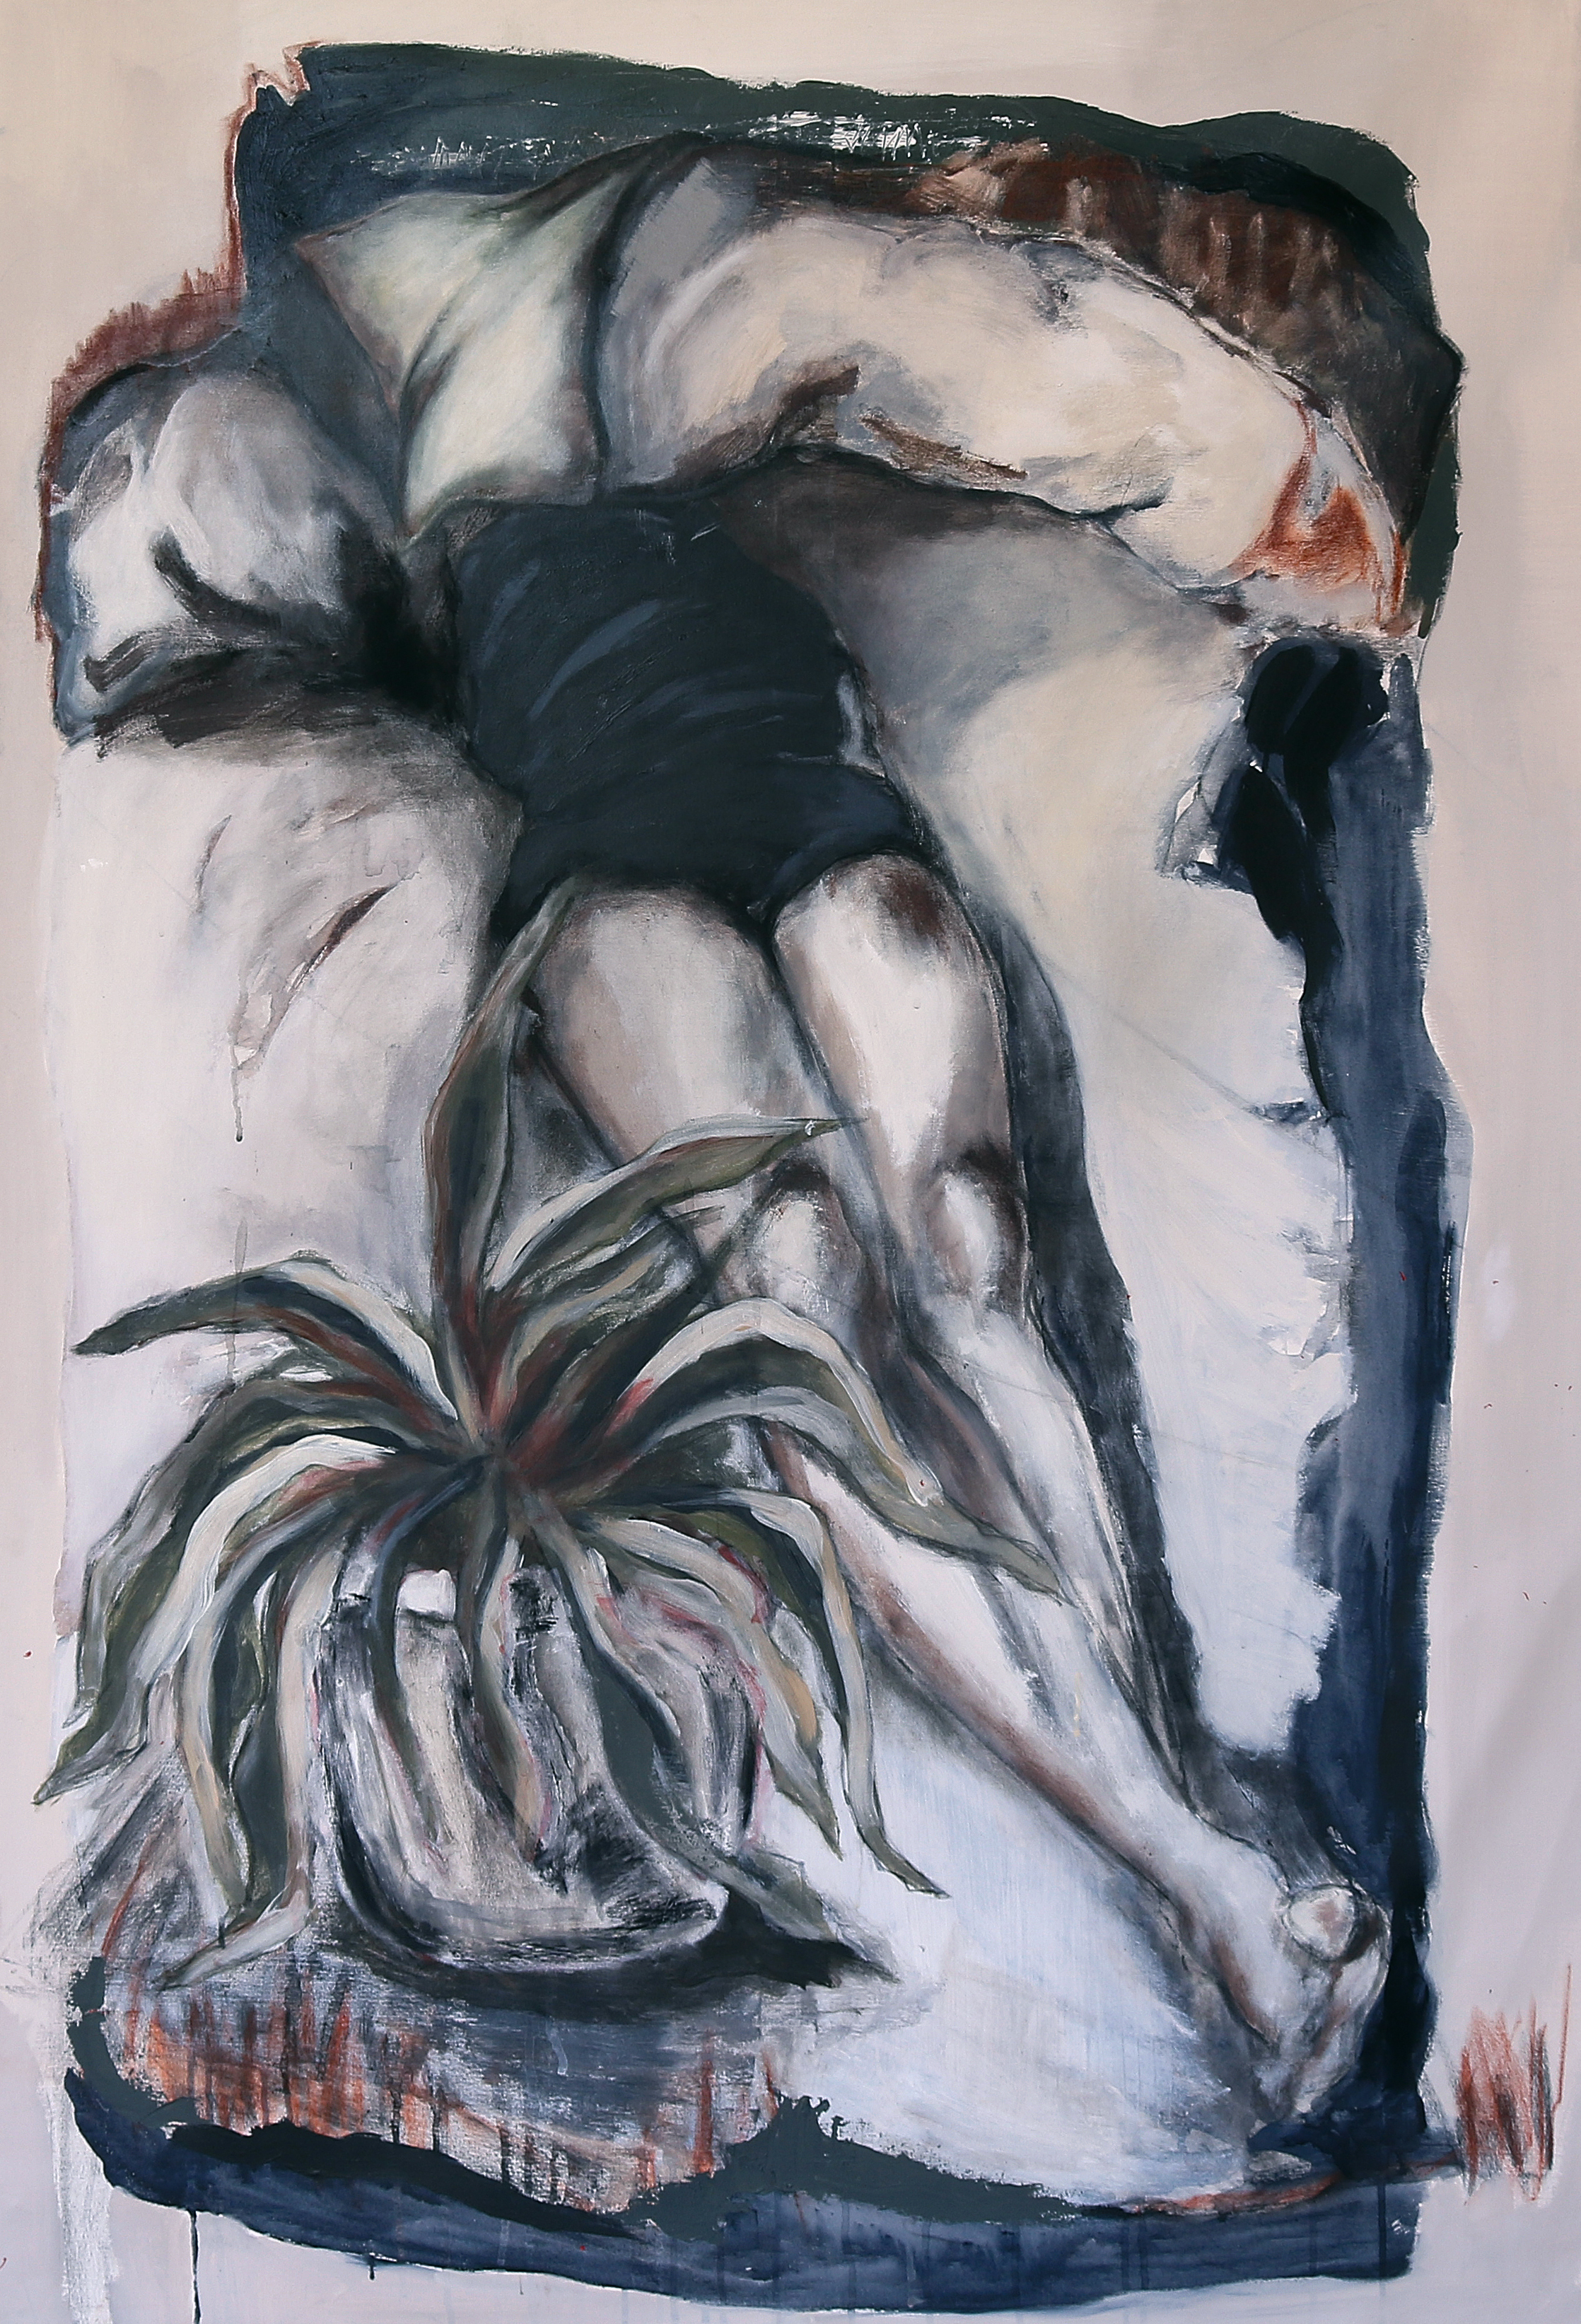  Sleeping Figure, 2016, acrylic on canvas, 150 x 100 cm 